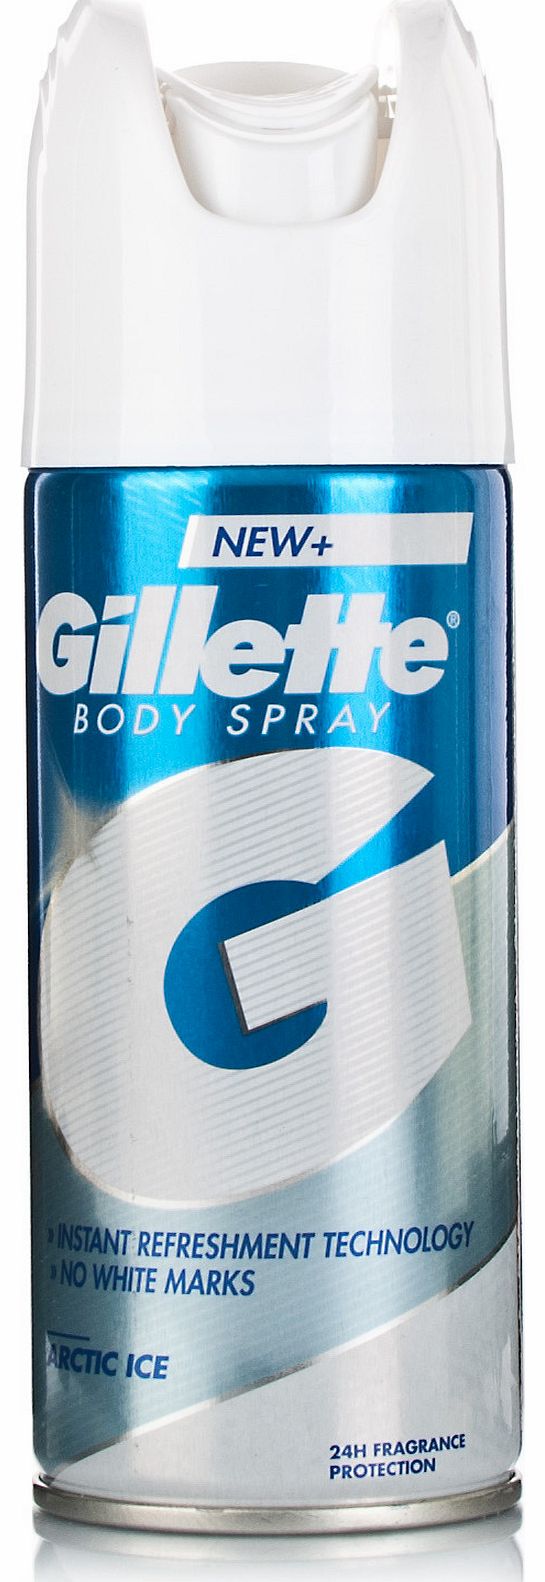 Gillette Arctic Ice Body Spray